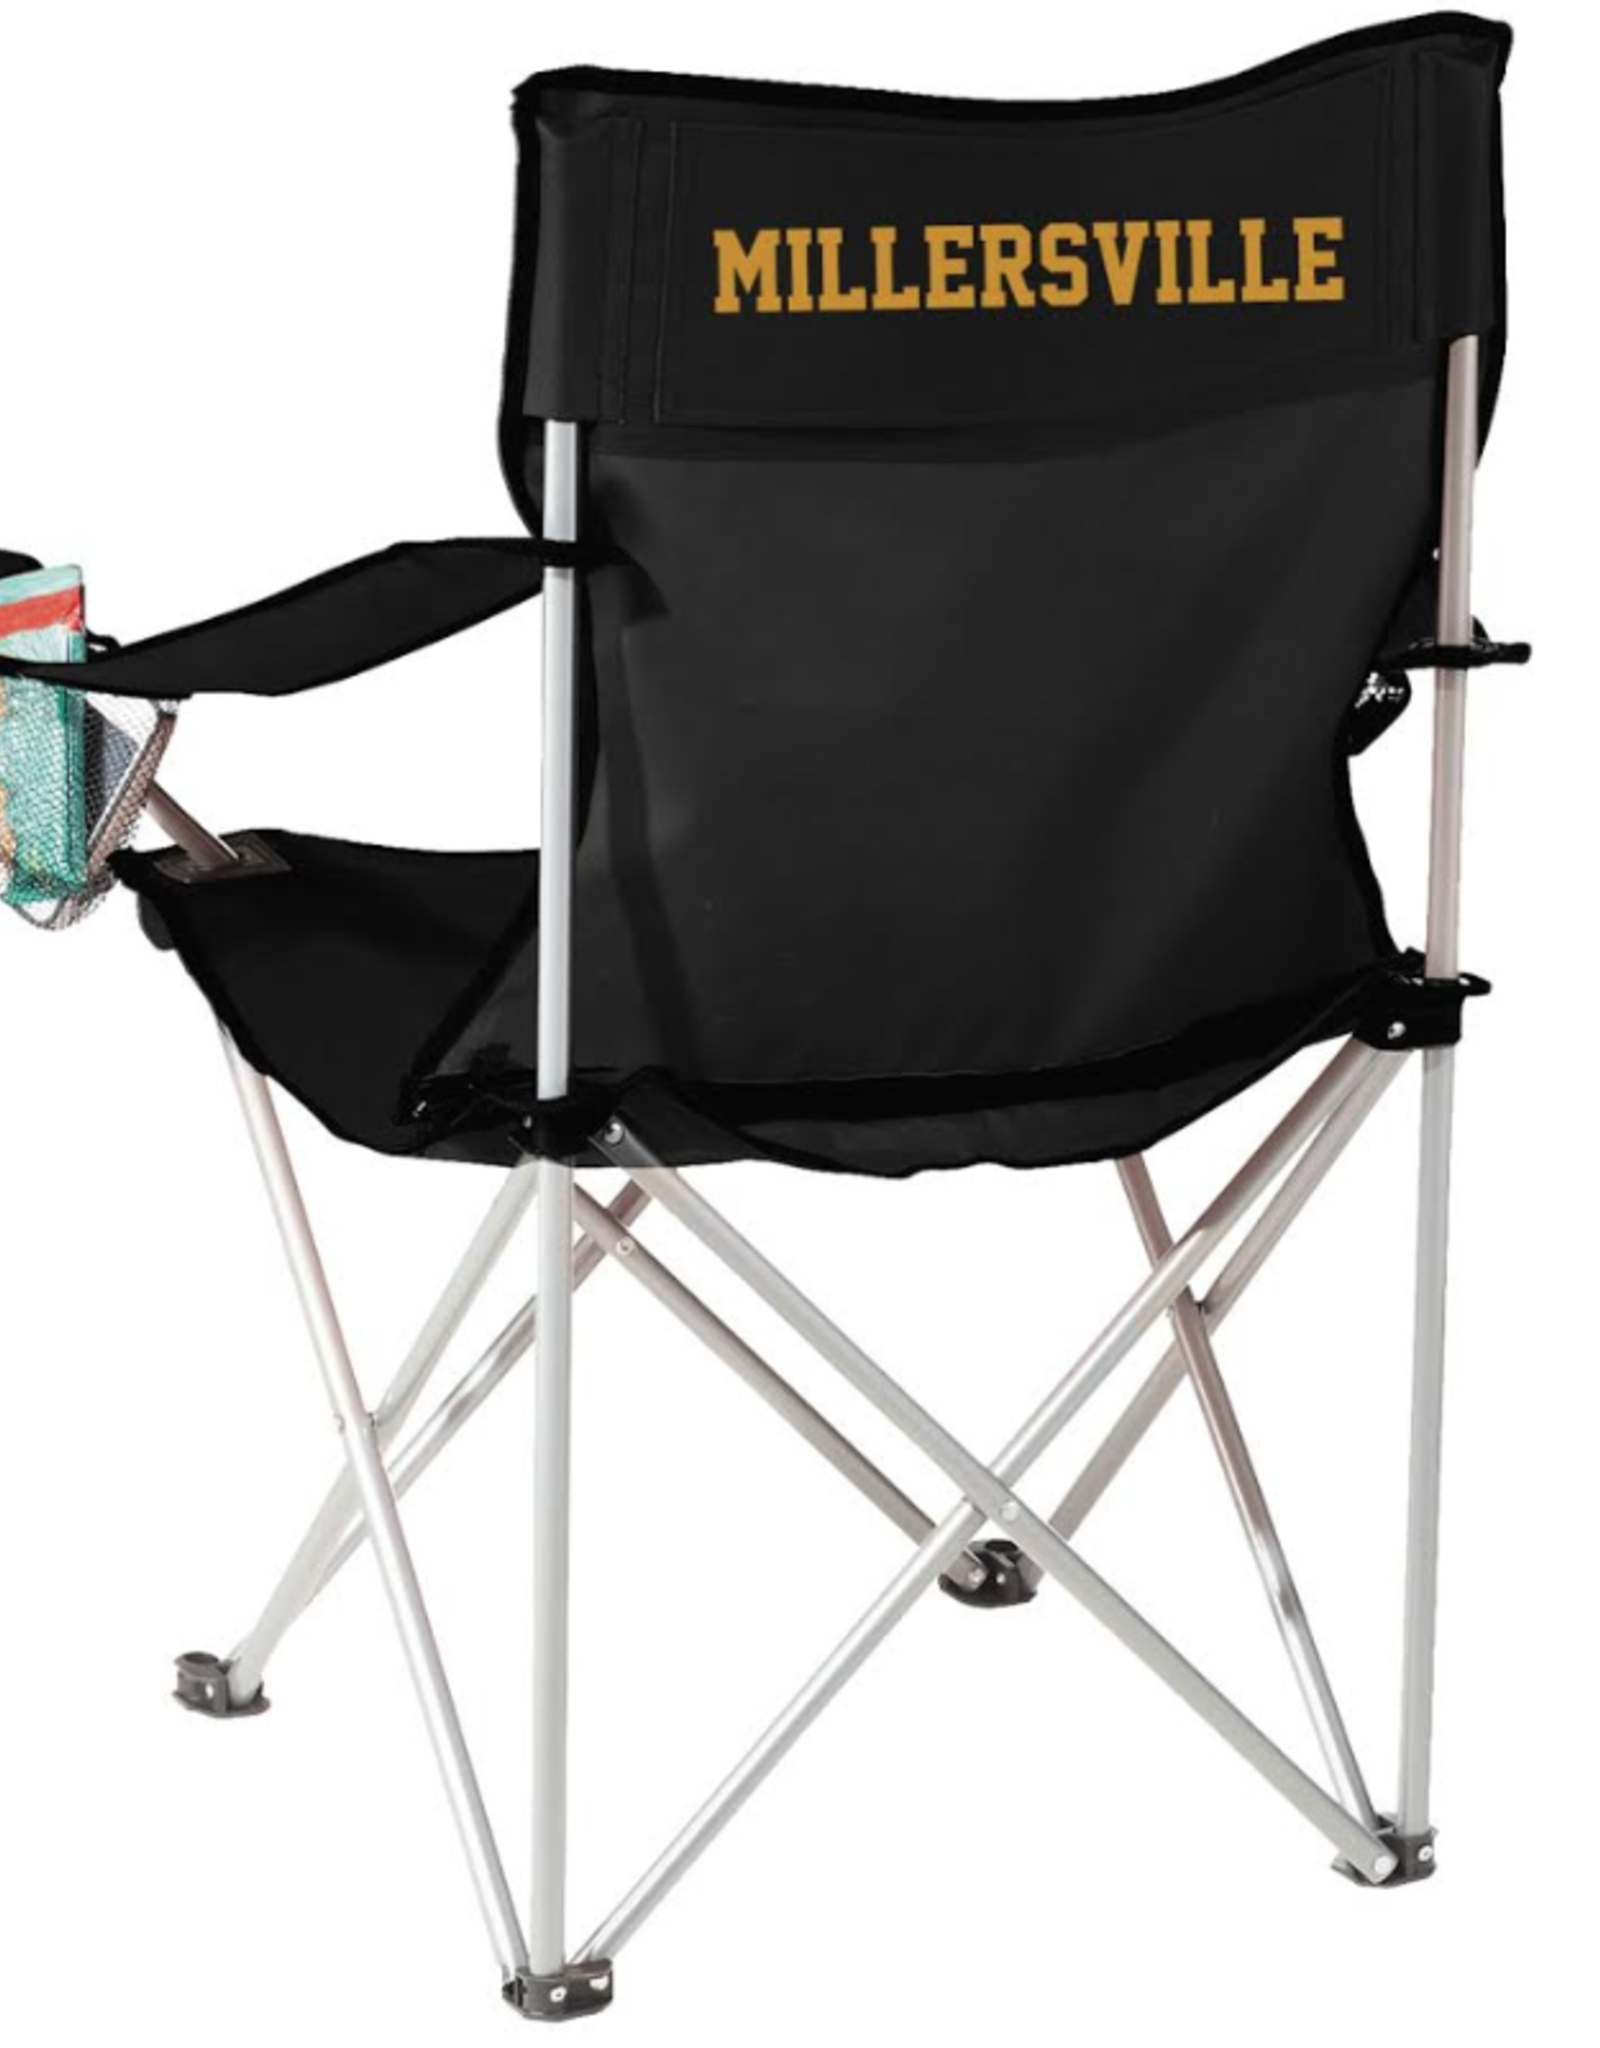 Millersville Folding Chair